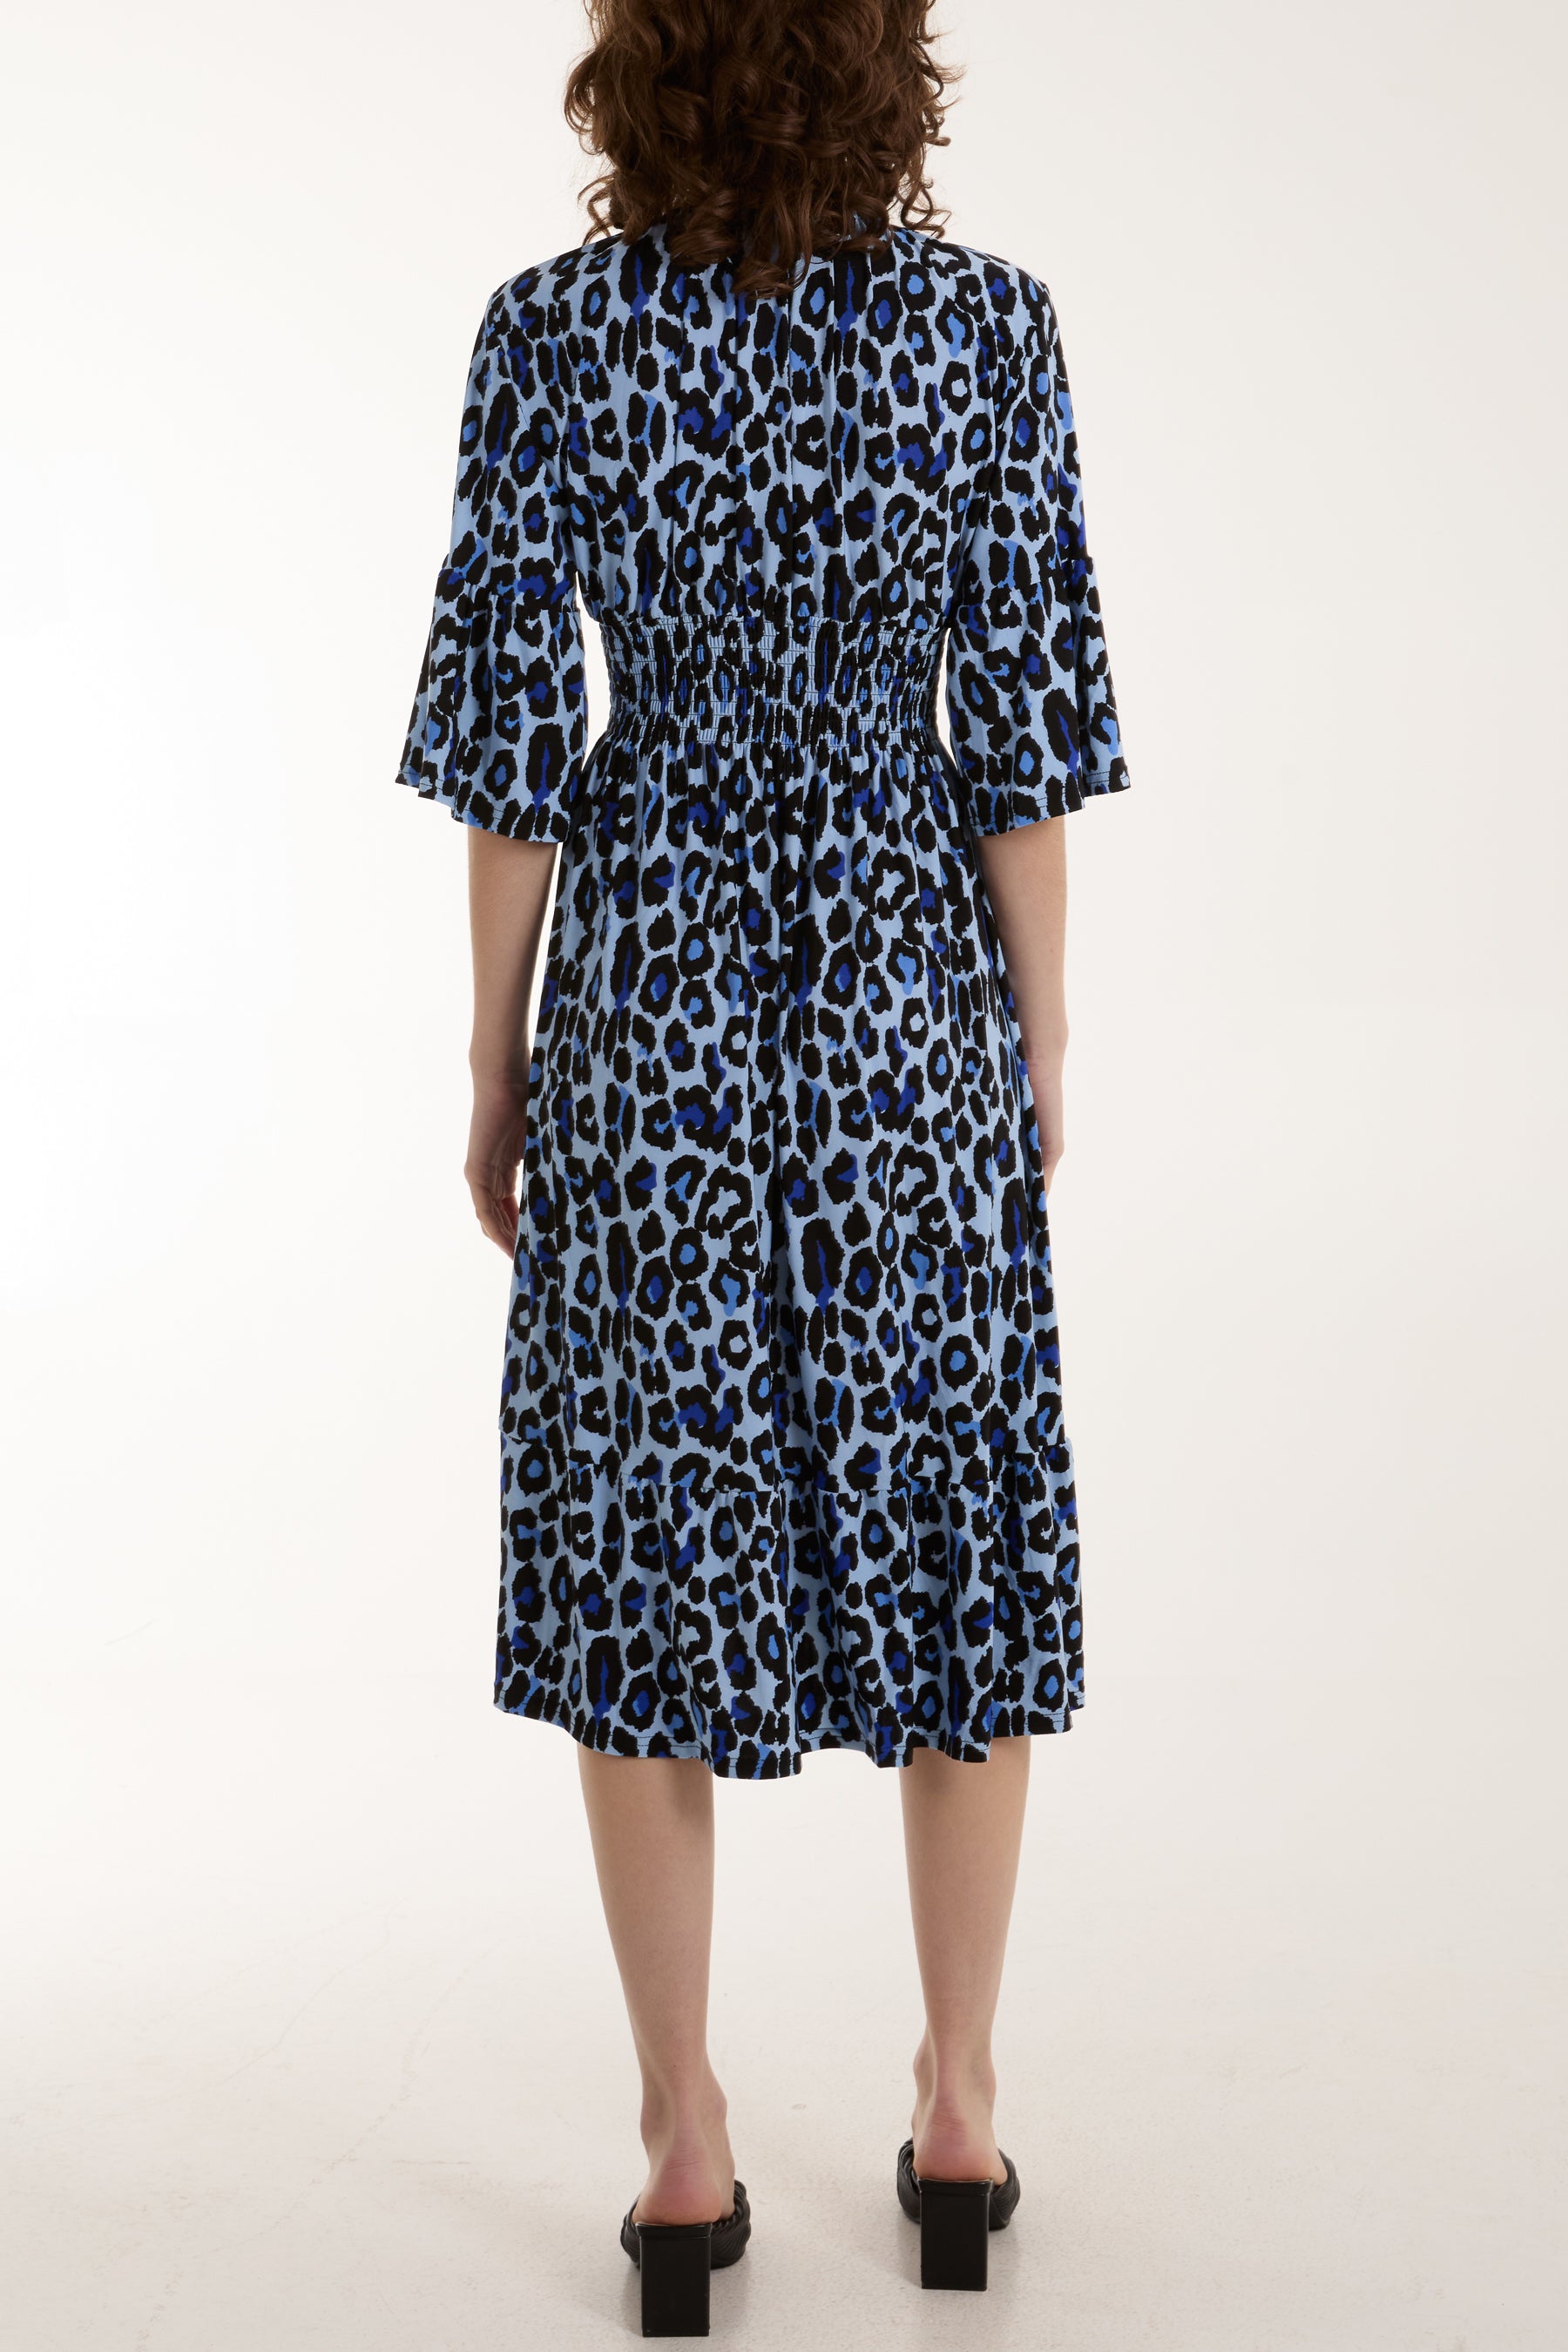 V-Neck Leopard Print Elastic Stretch Midi Dress